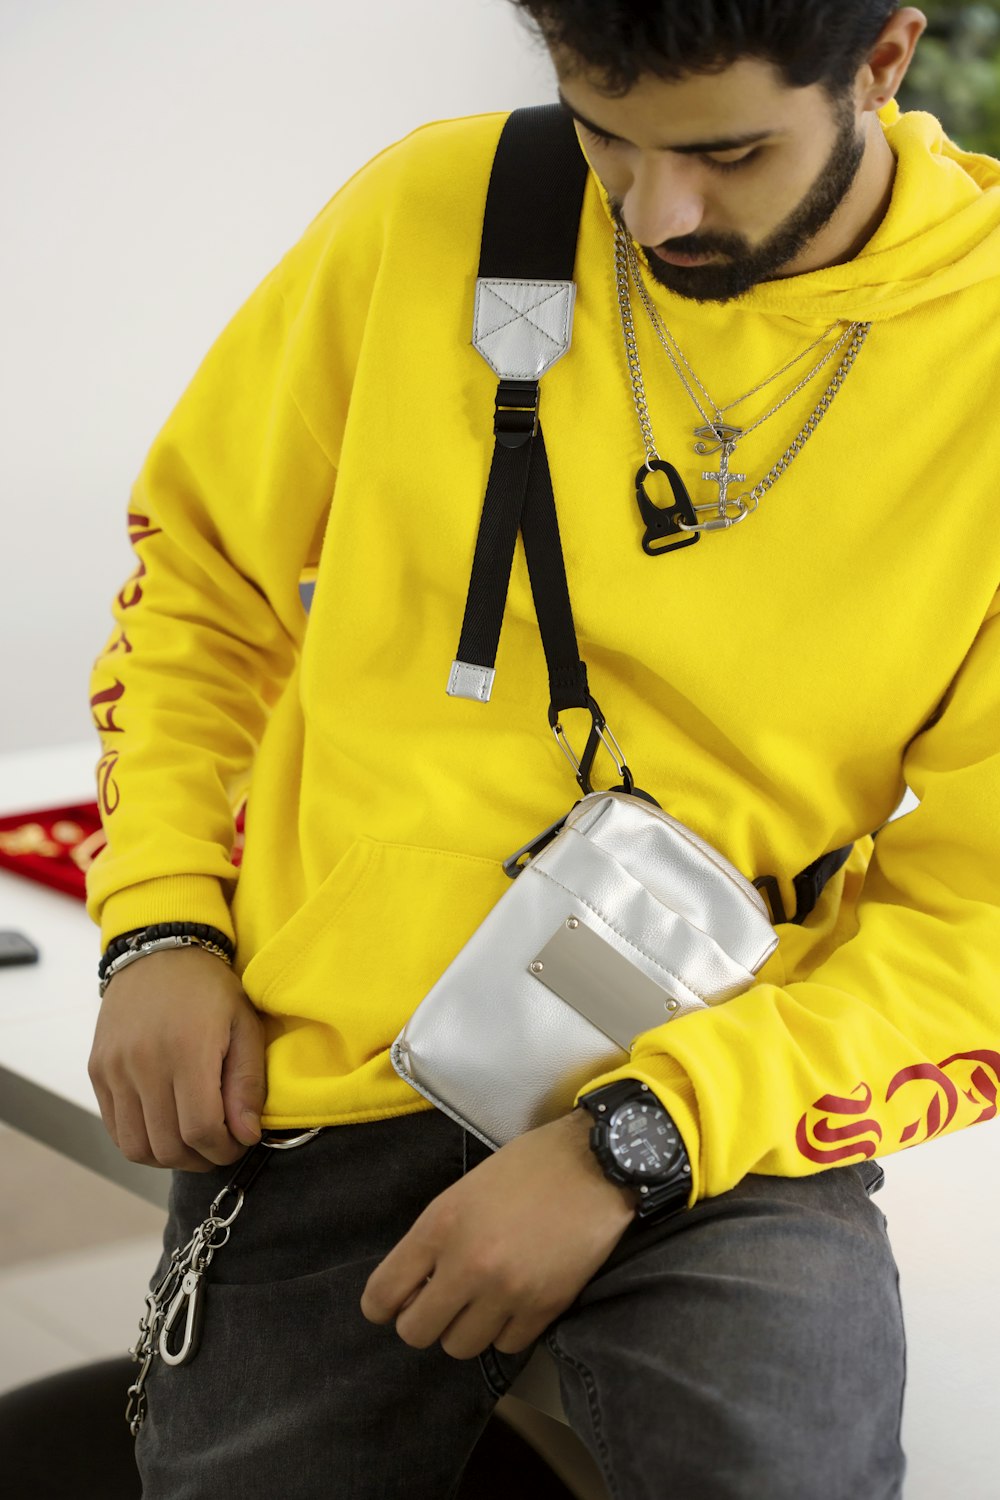 man in yellow jacket wearing black watch